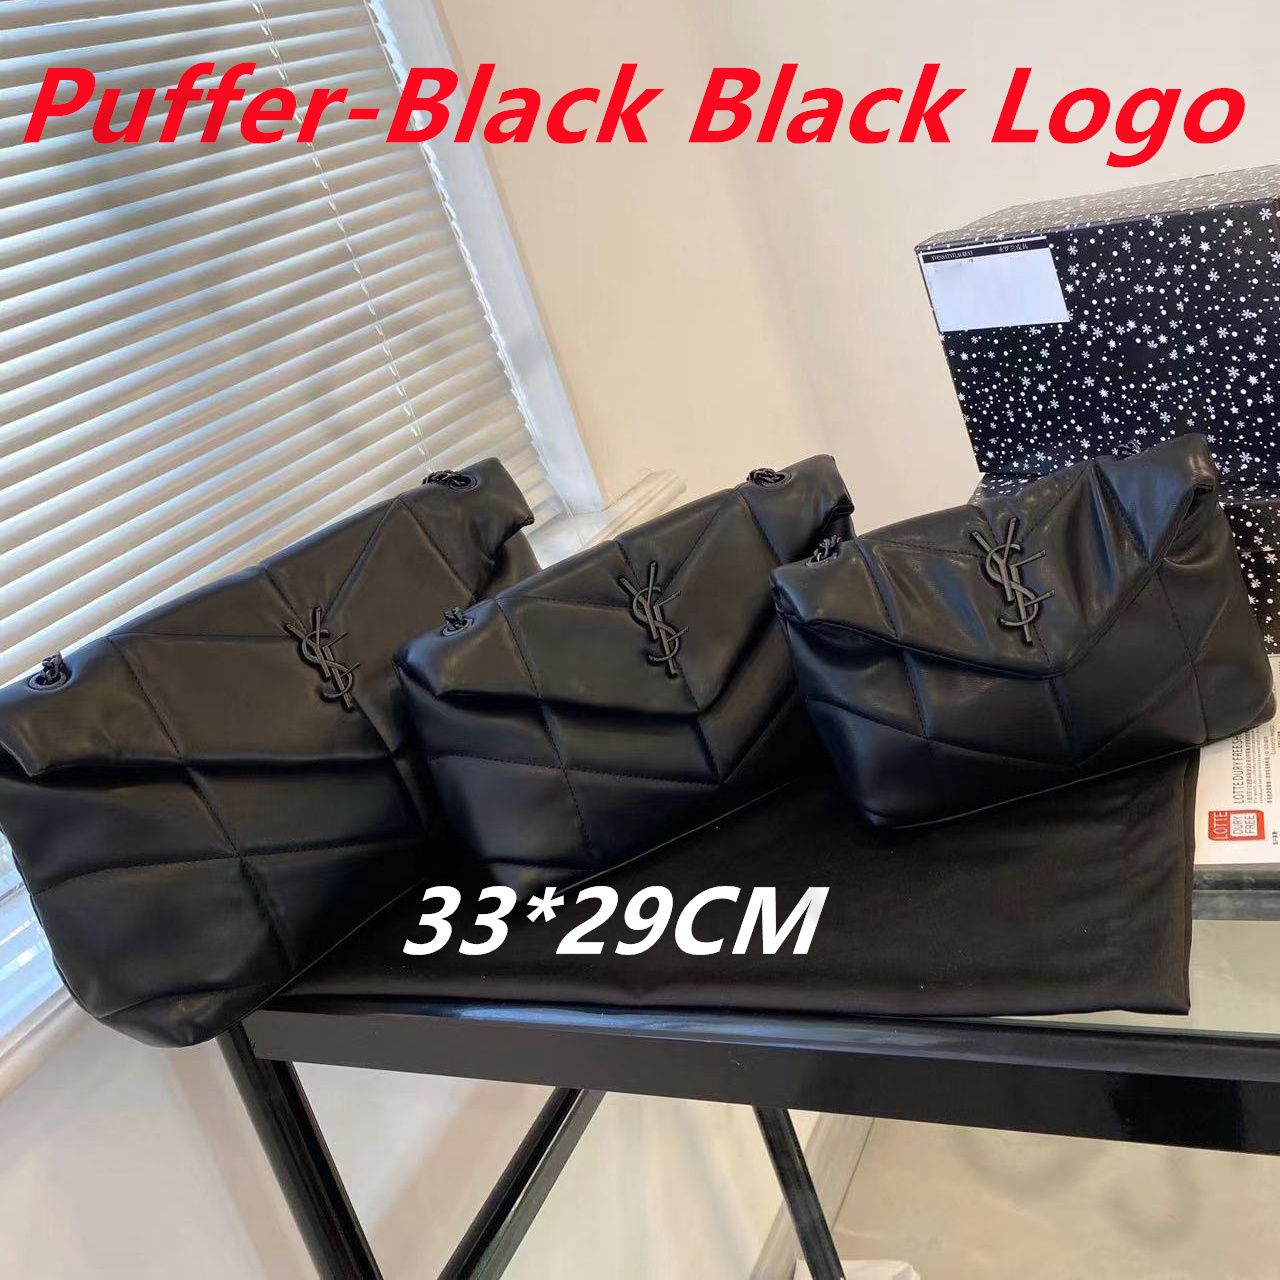 Puffer-Black Black m